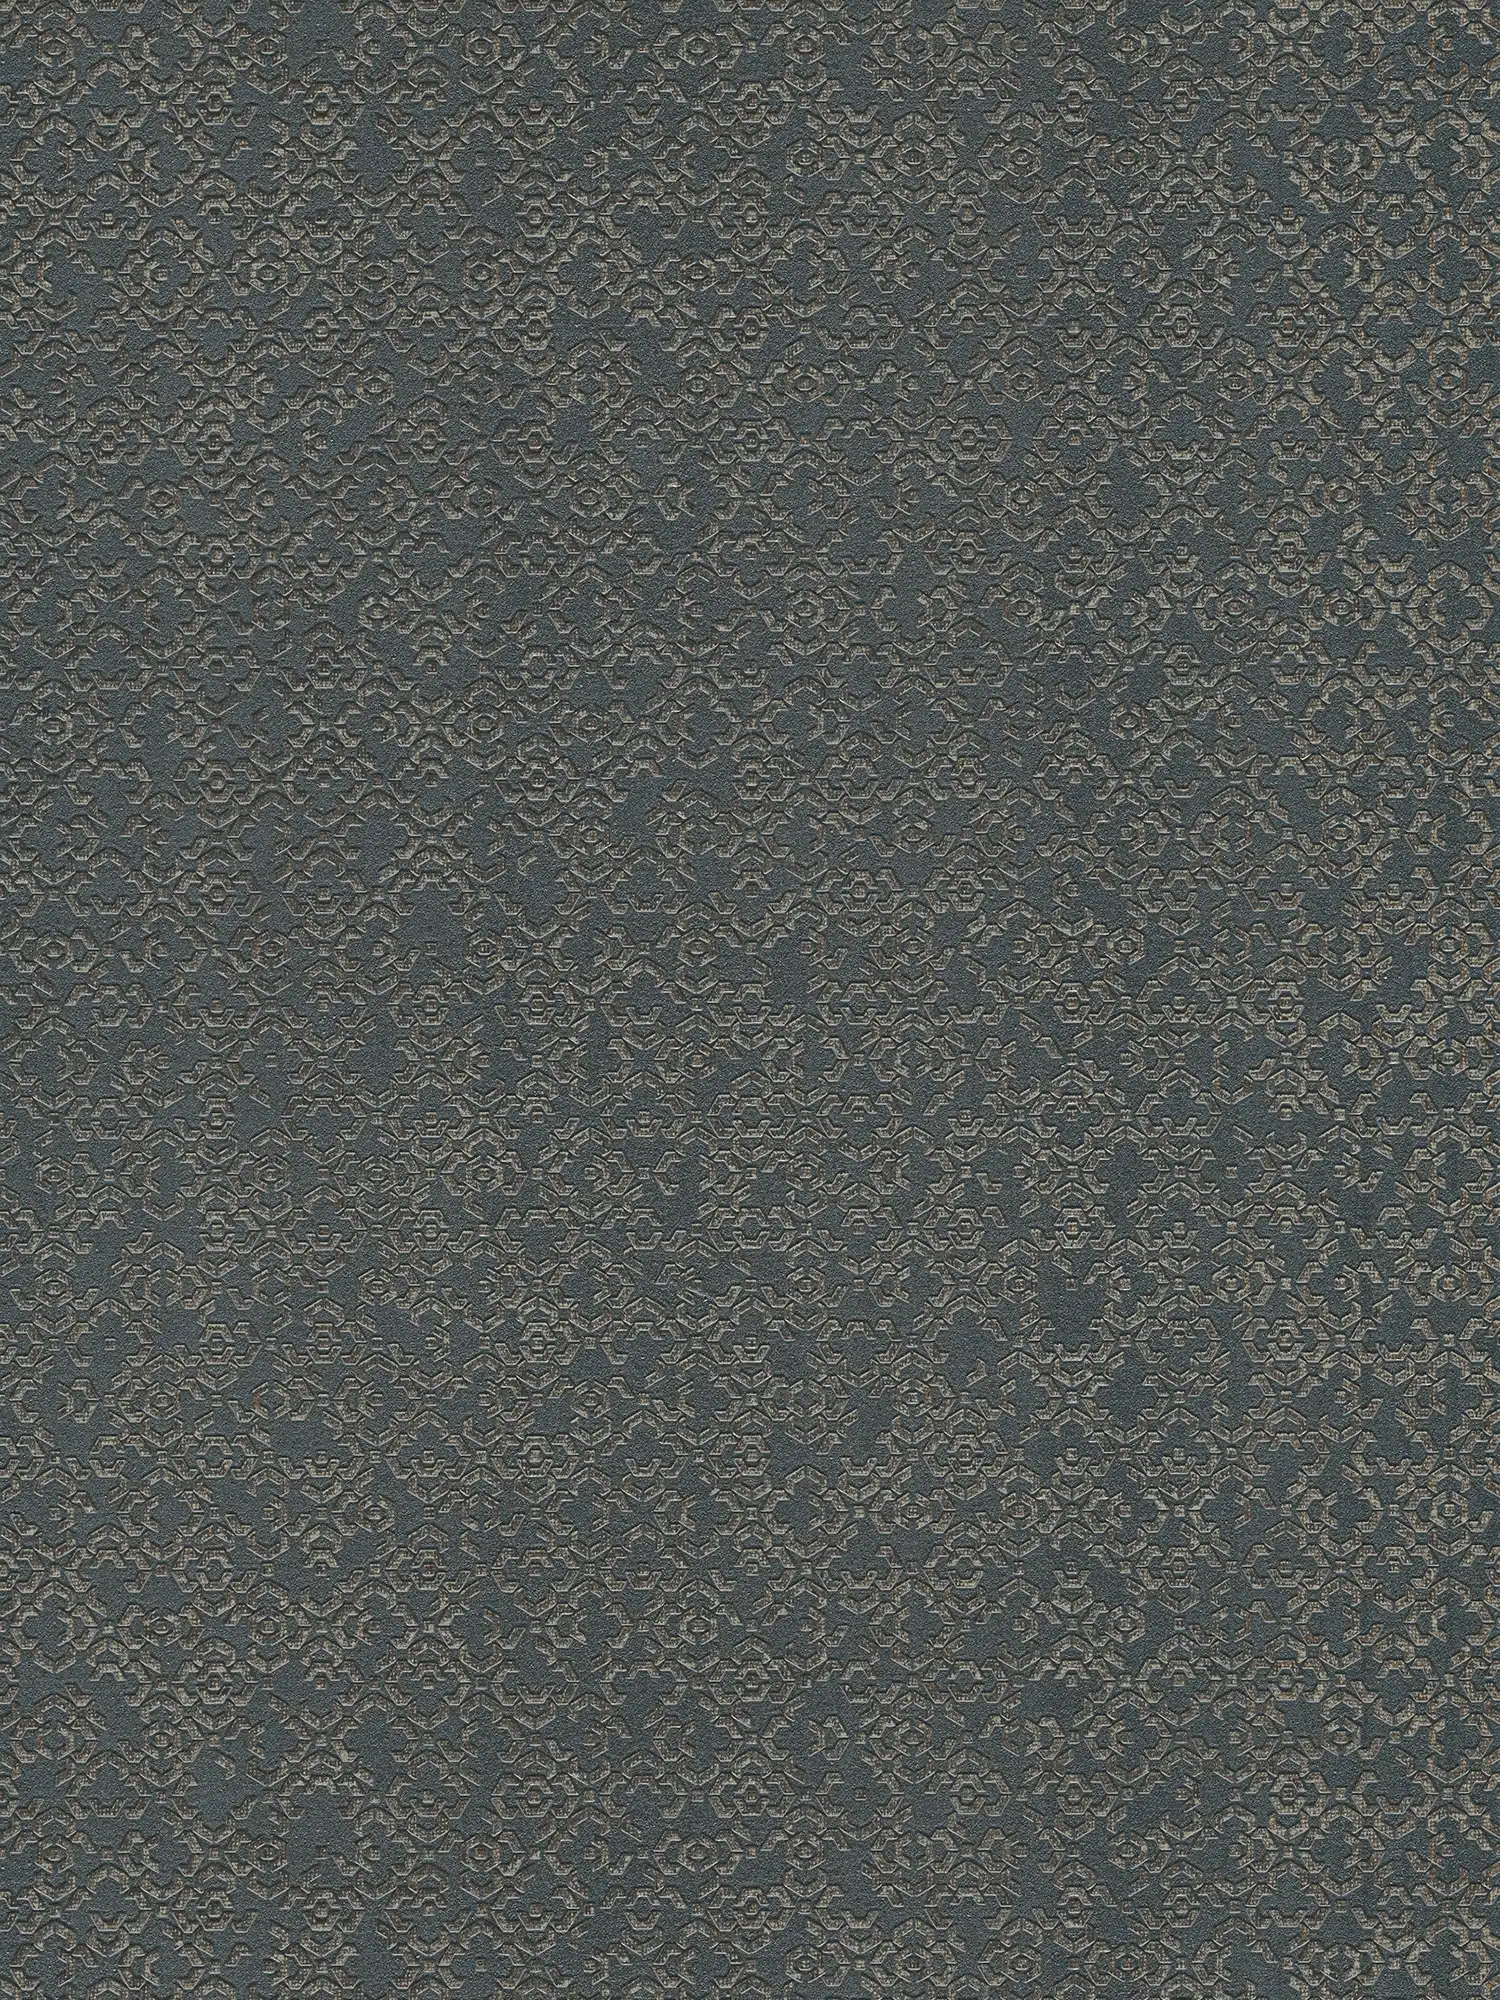 3D non-woven wallpaper with metallic effect - grey, metallic
